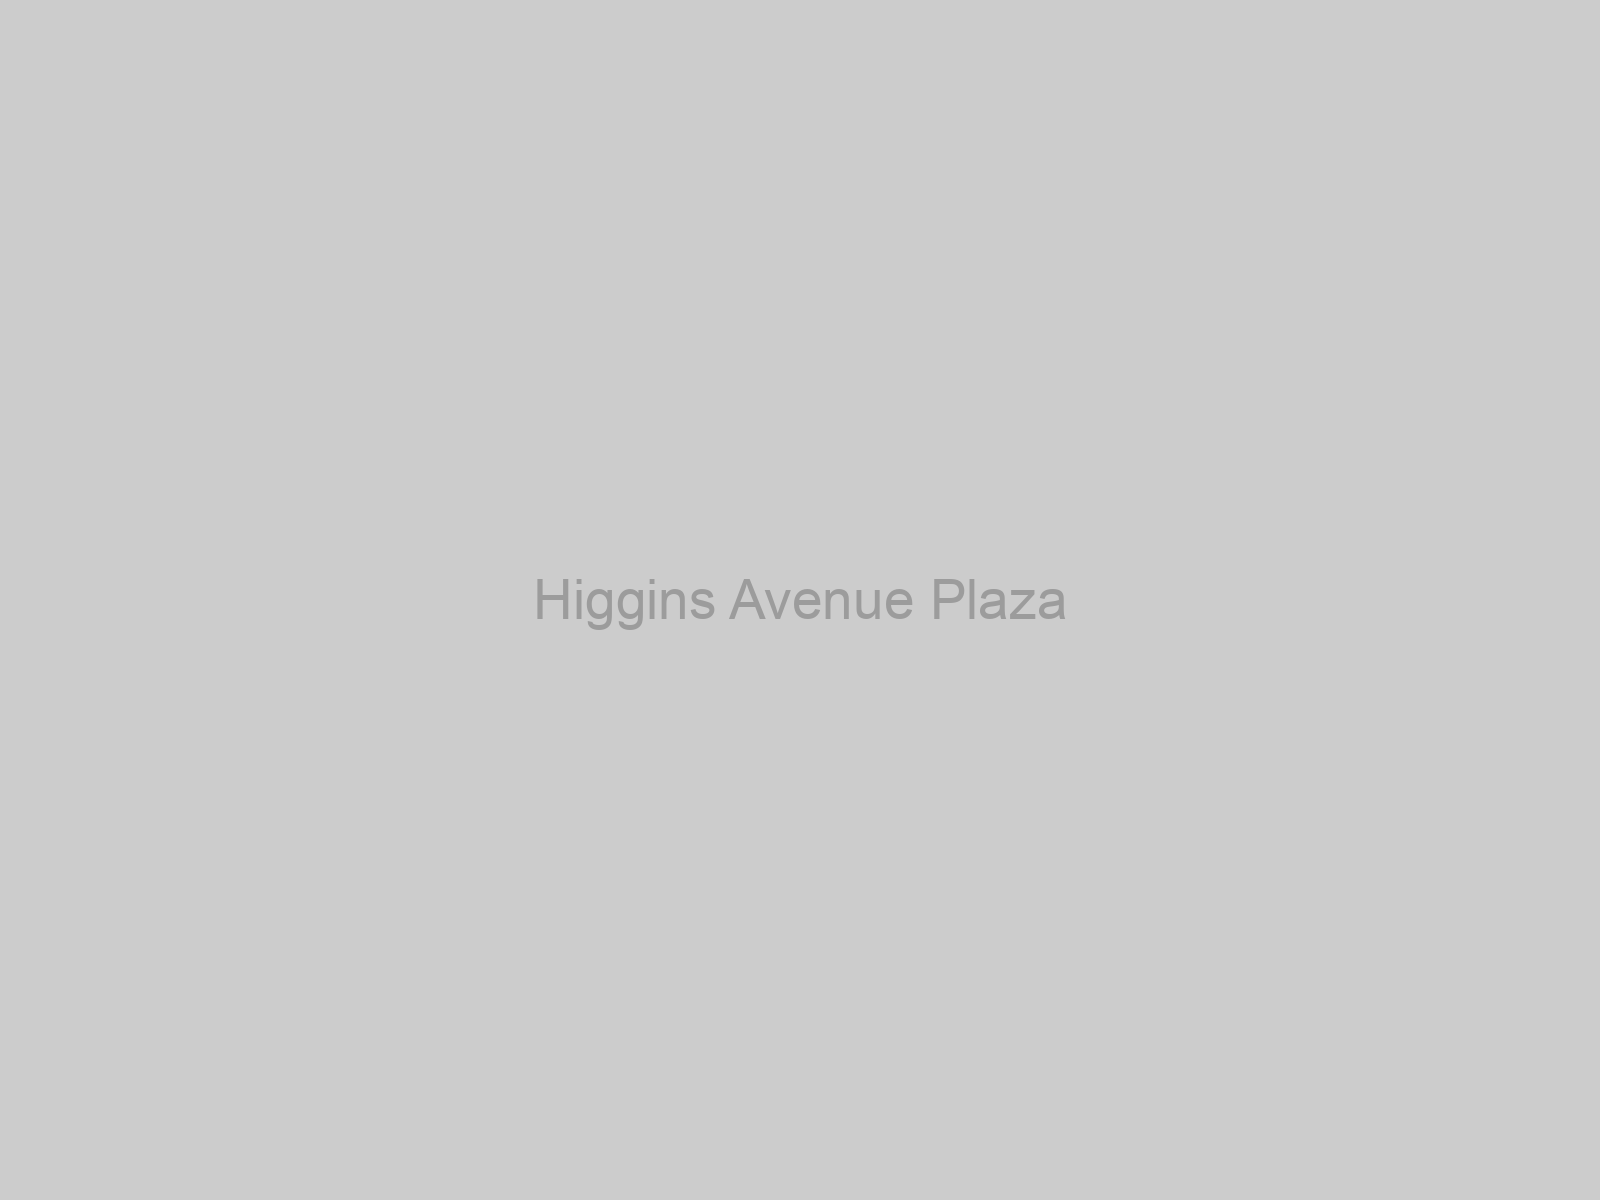 Higgins Avenue Plaza